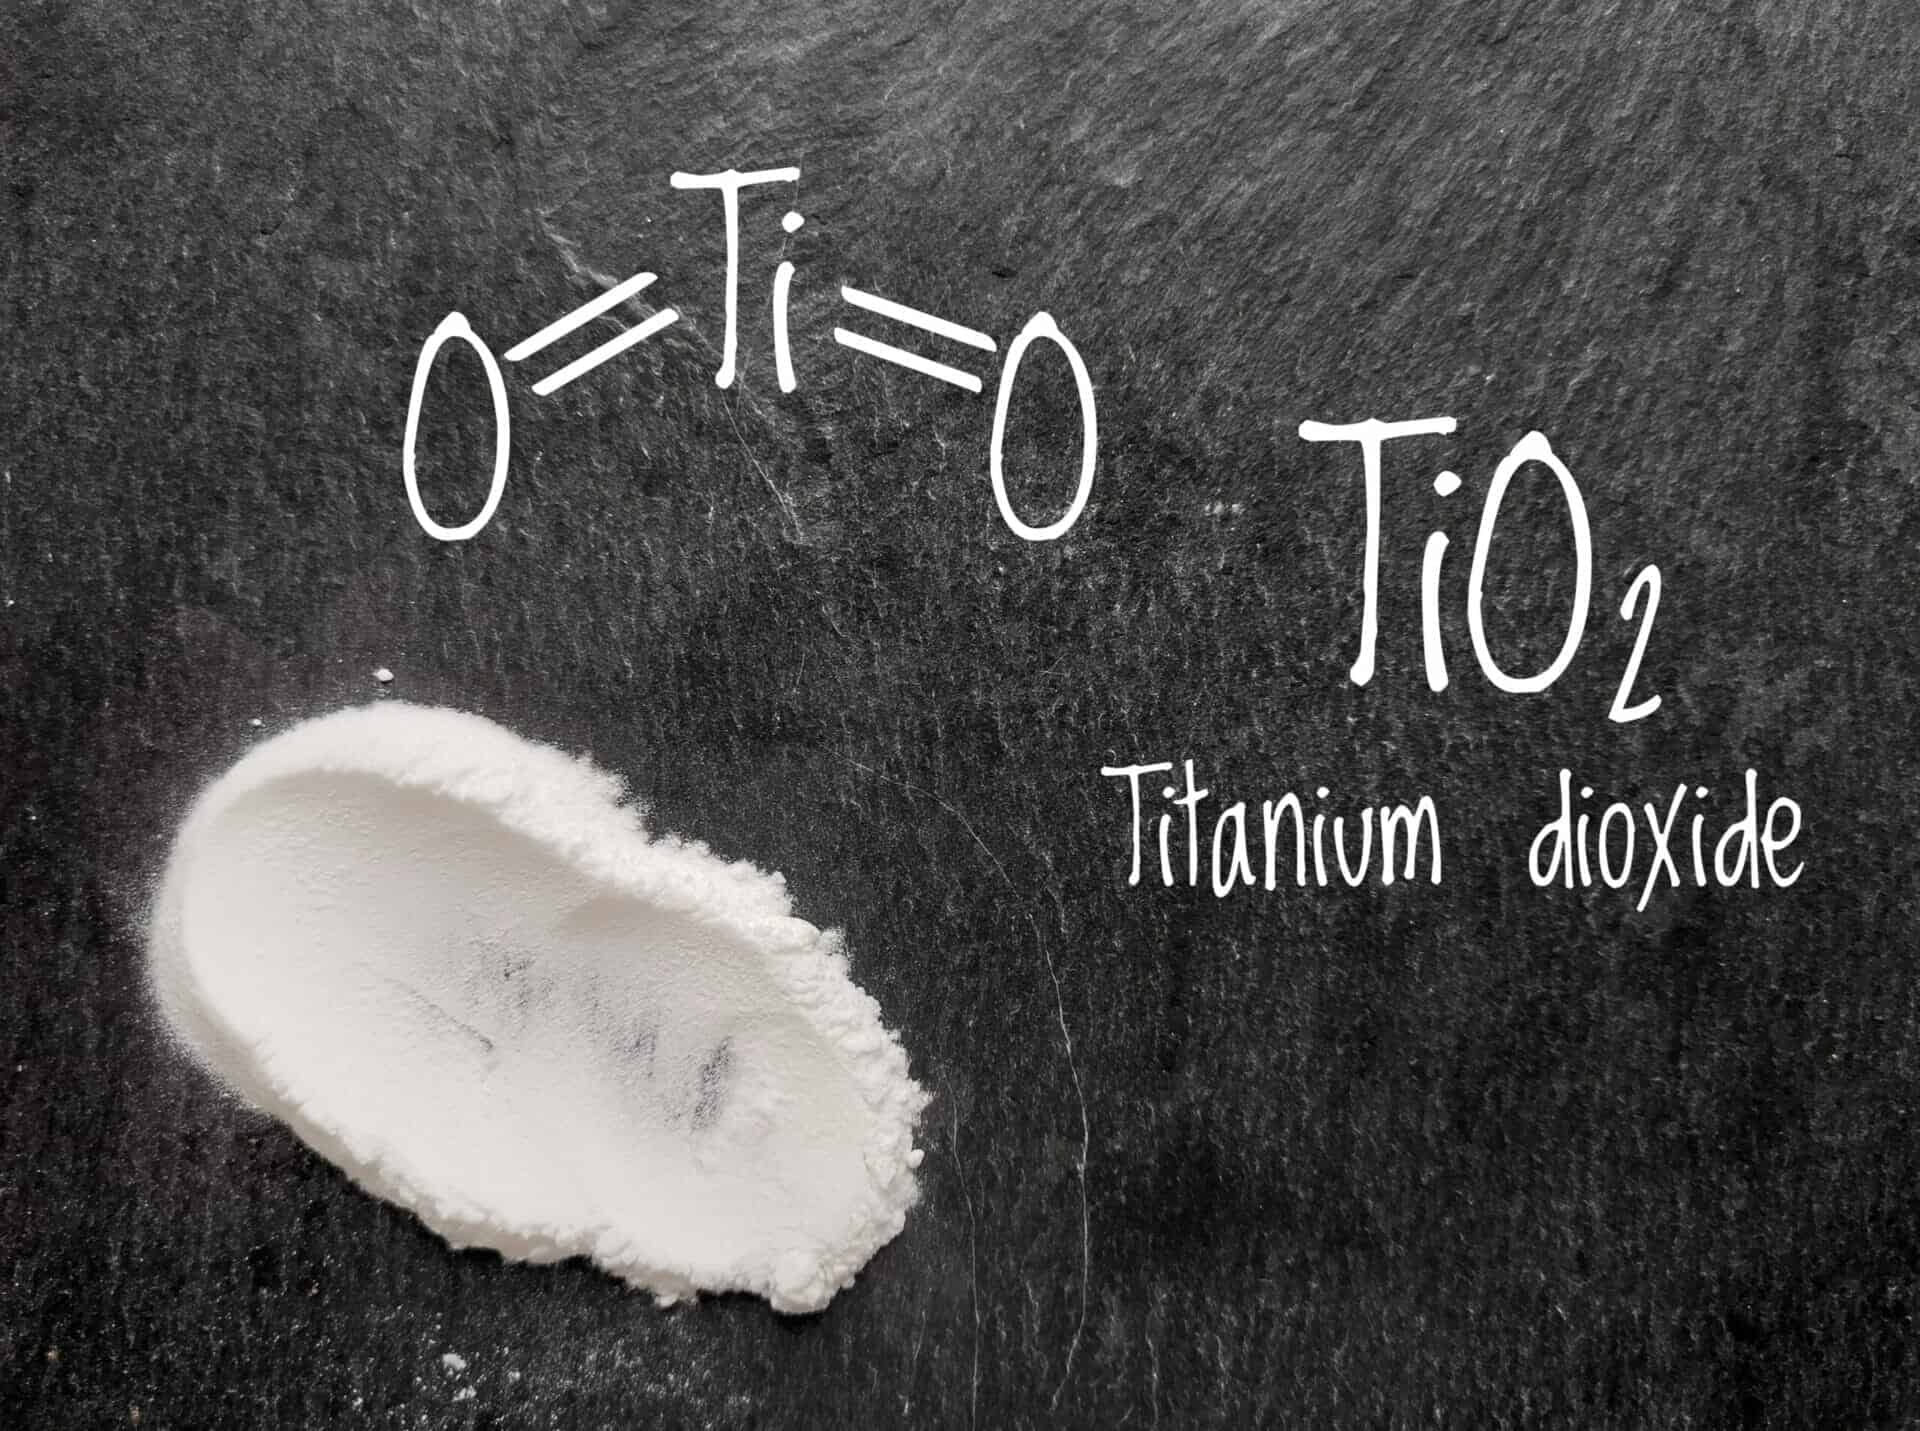 Dióxido-titanio